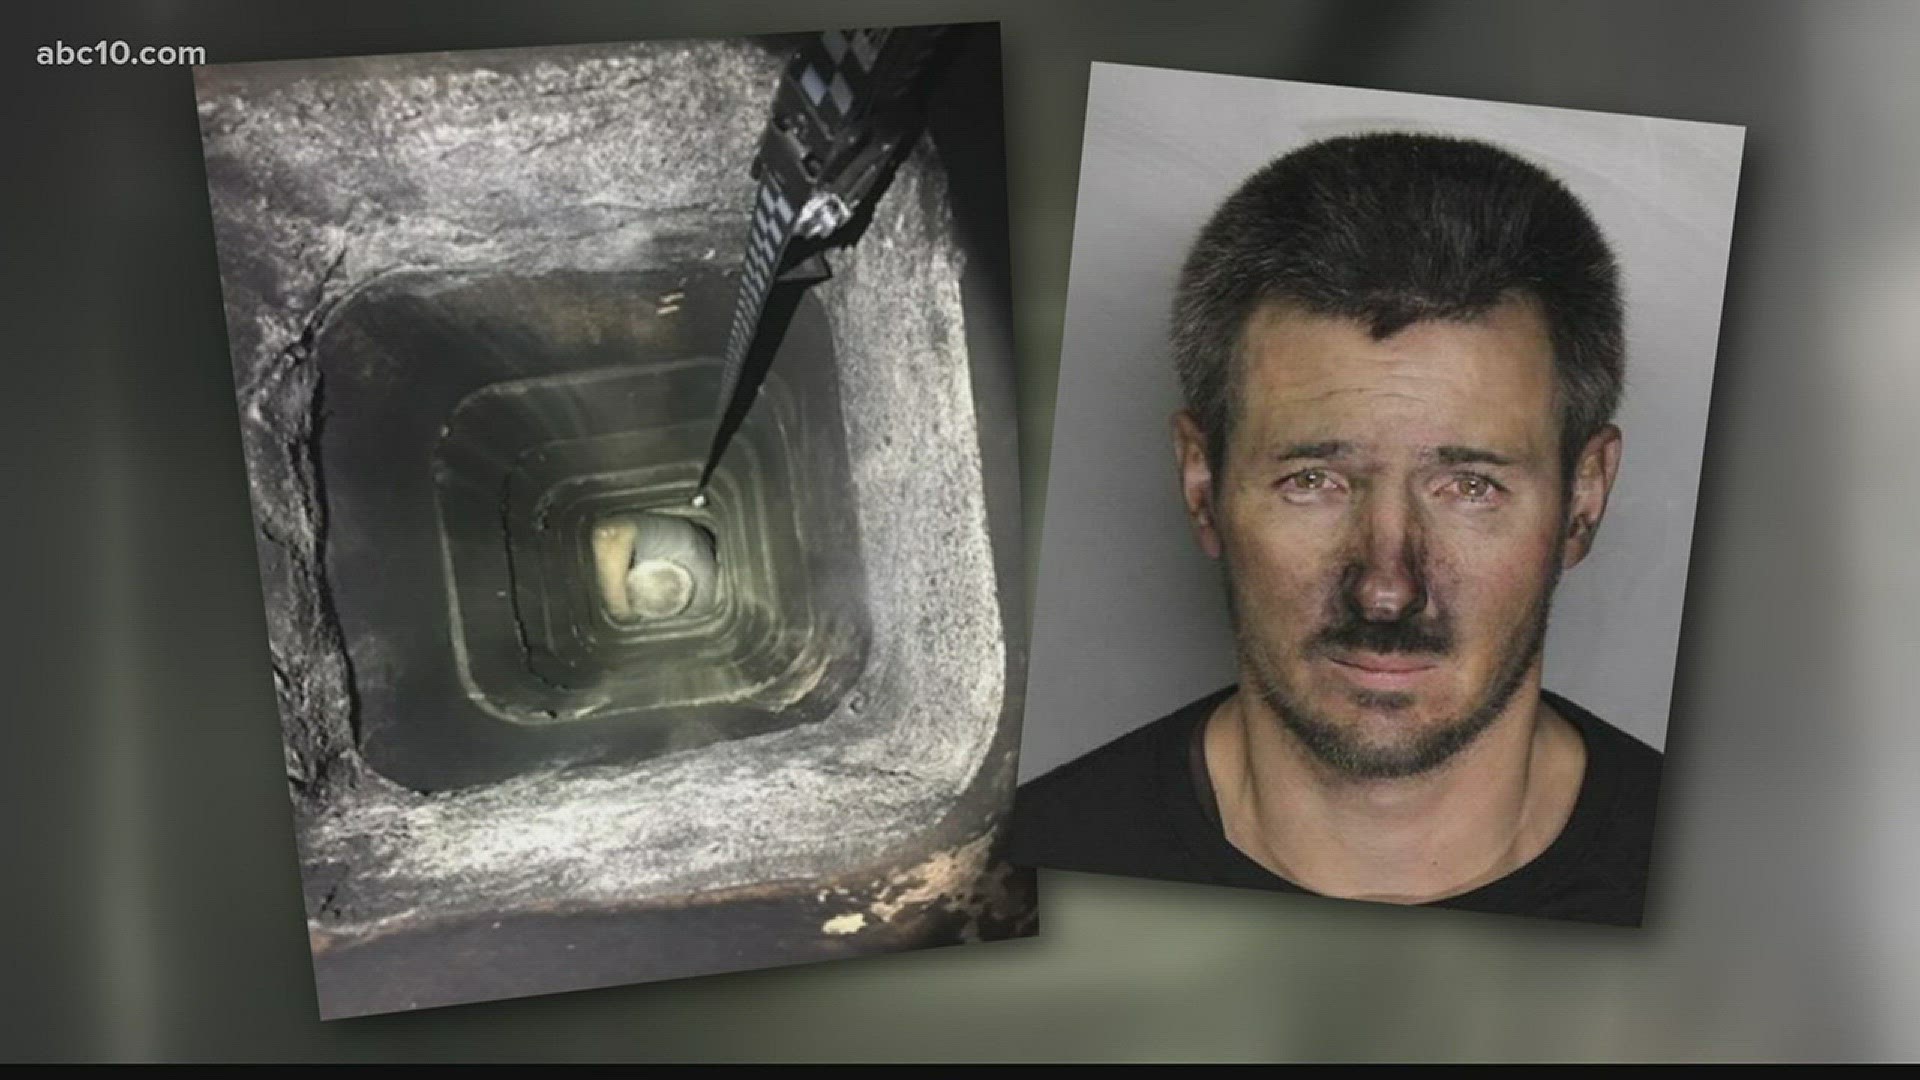 Police arrest man stuck in chimney (December 15, 2017)